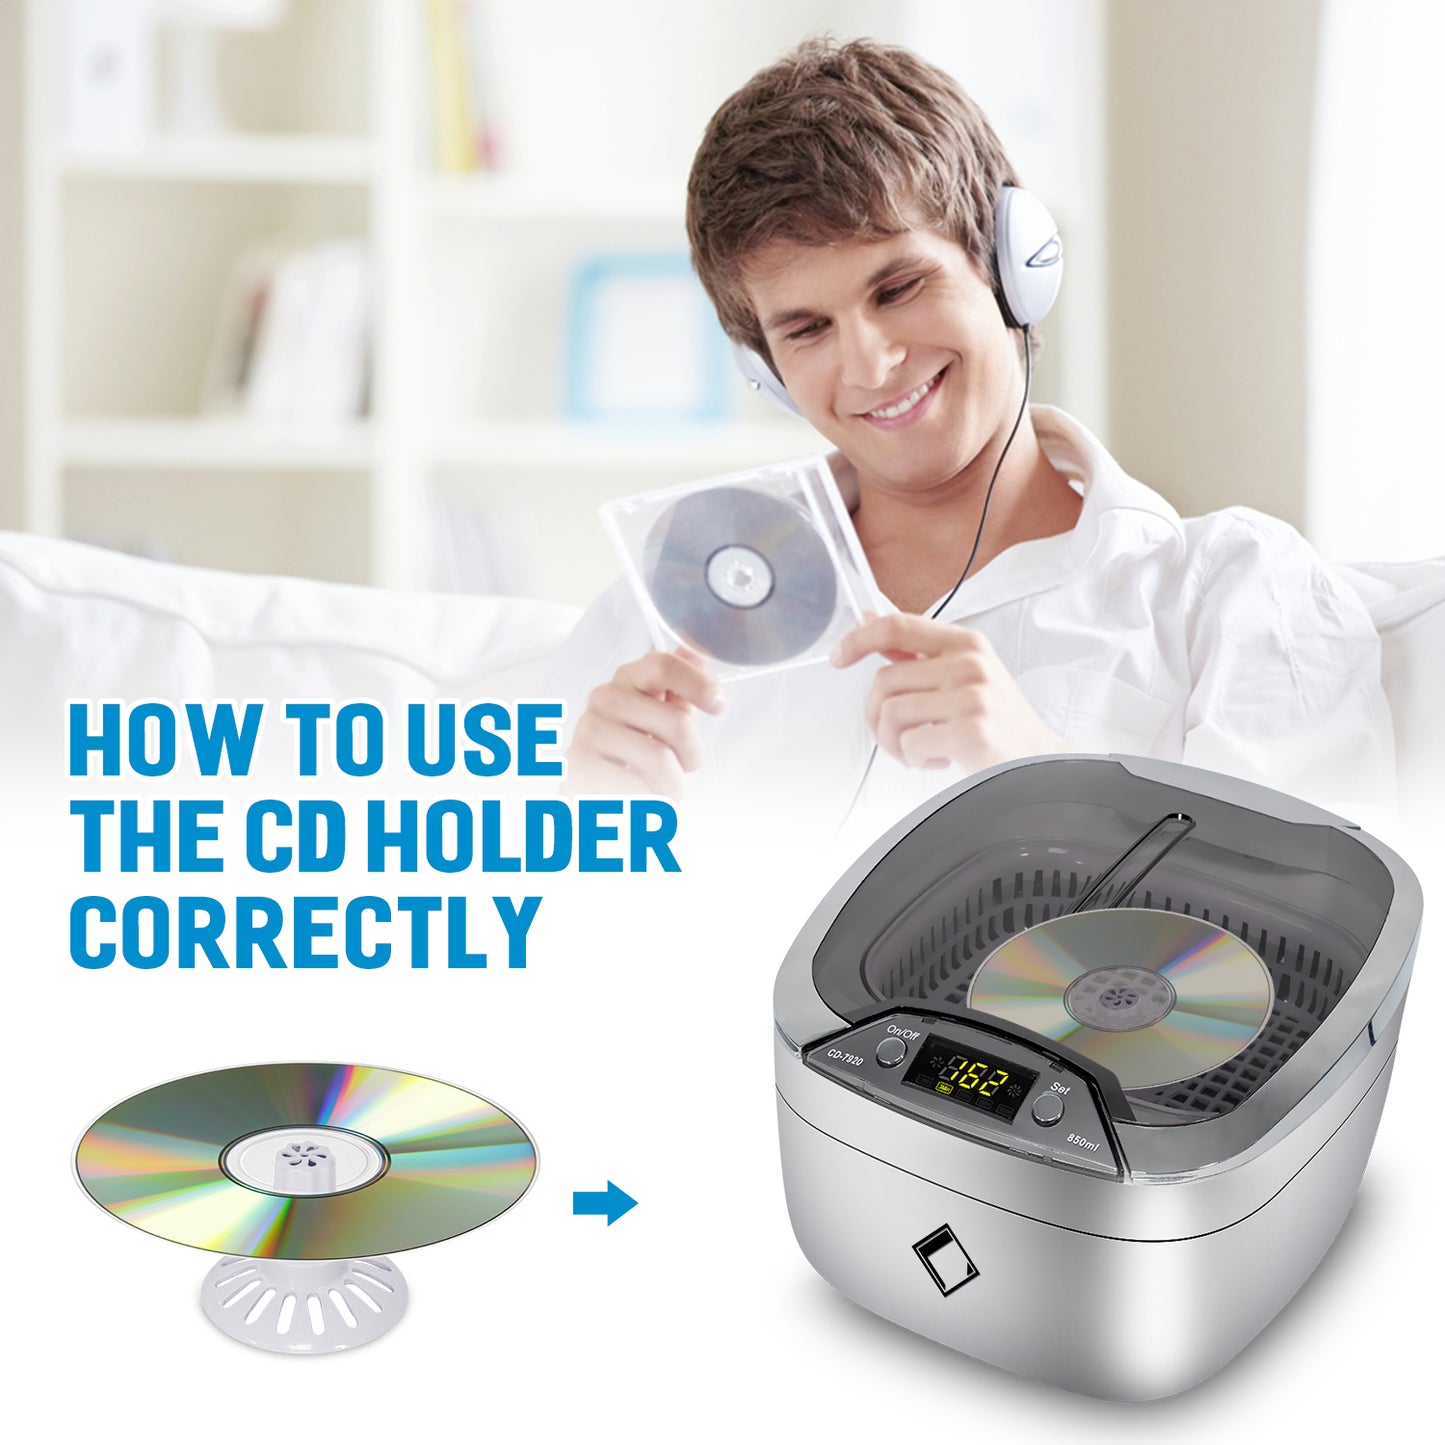 LifeBasis CD-7920 Digital Ultrasonic Cleaner